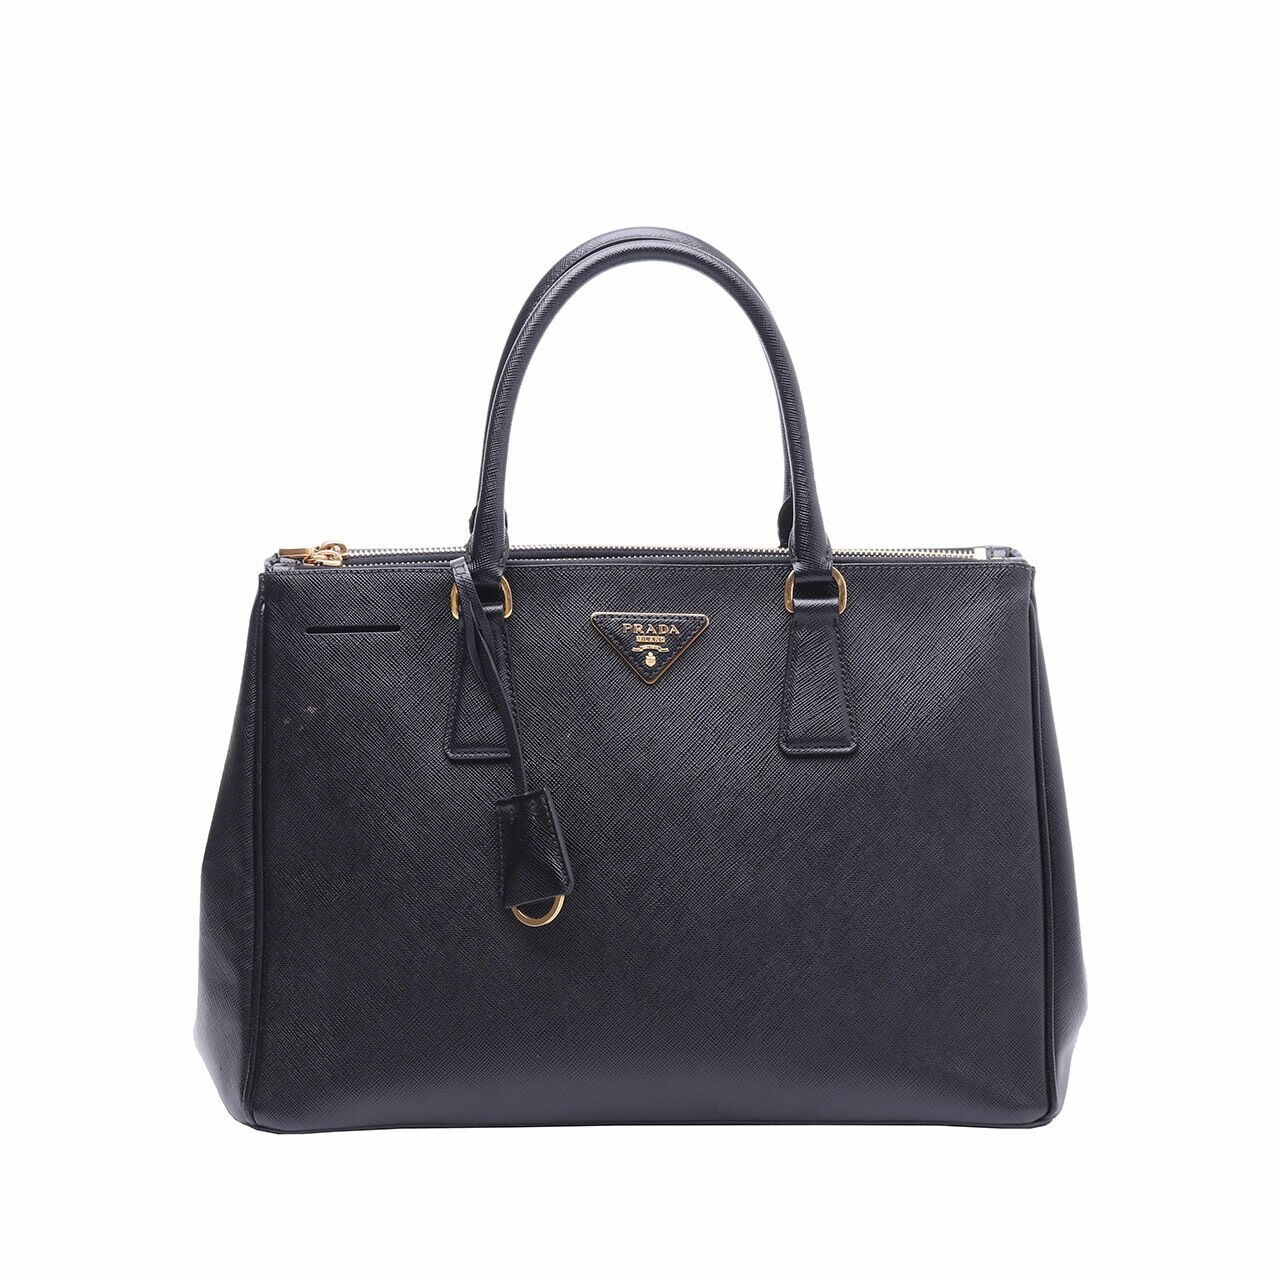 Prada Black Saffiano Lux Leather Double Zip Medium Tote Bag